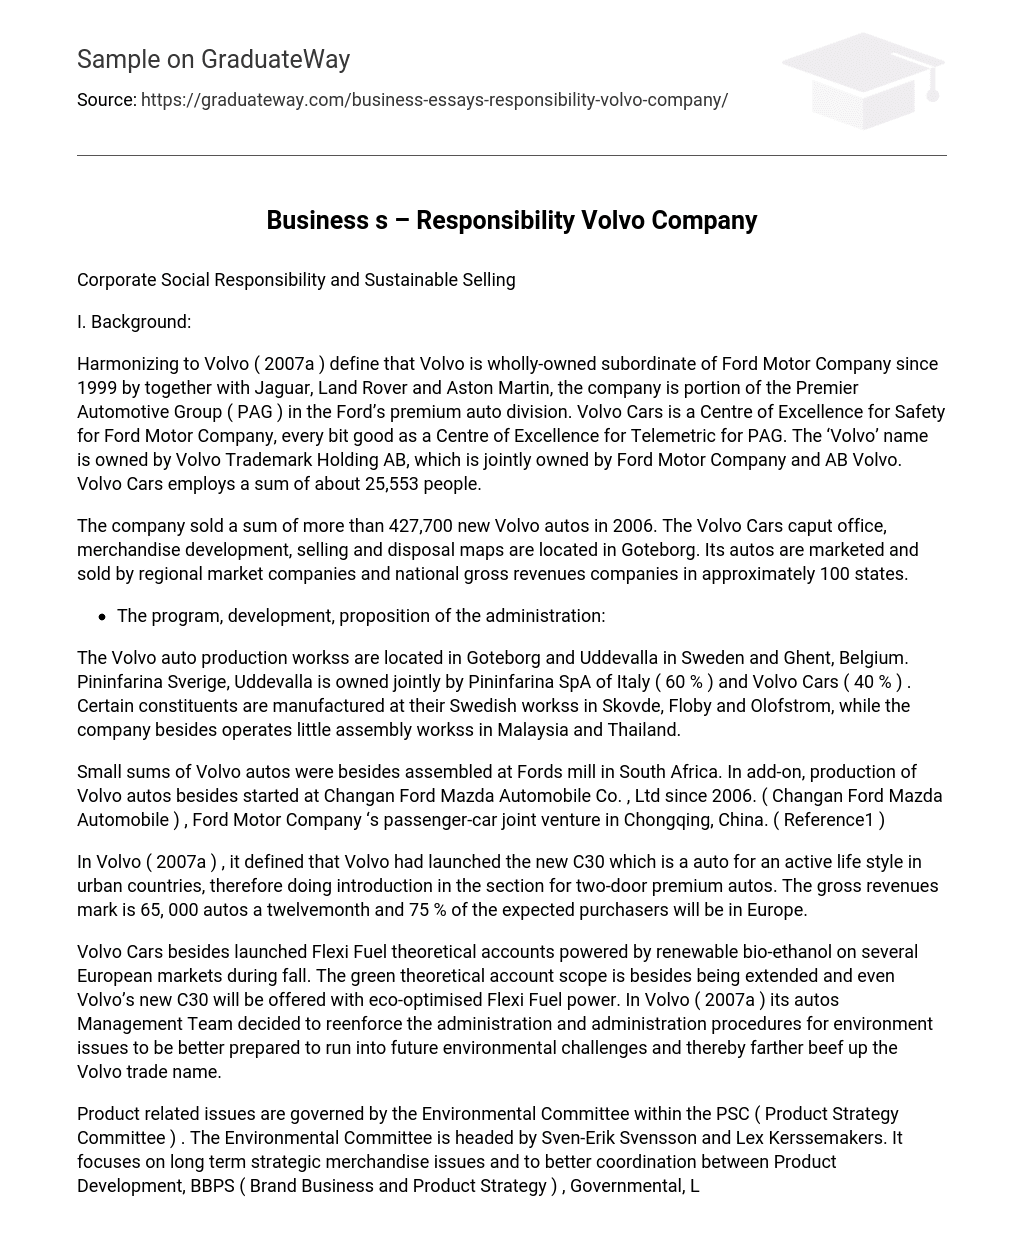 Business s – Responsibility Volvo Company